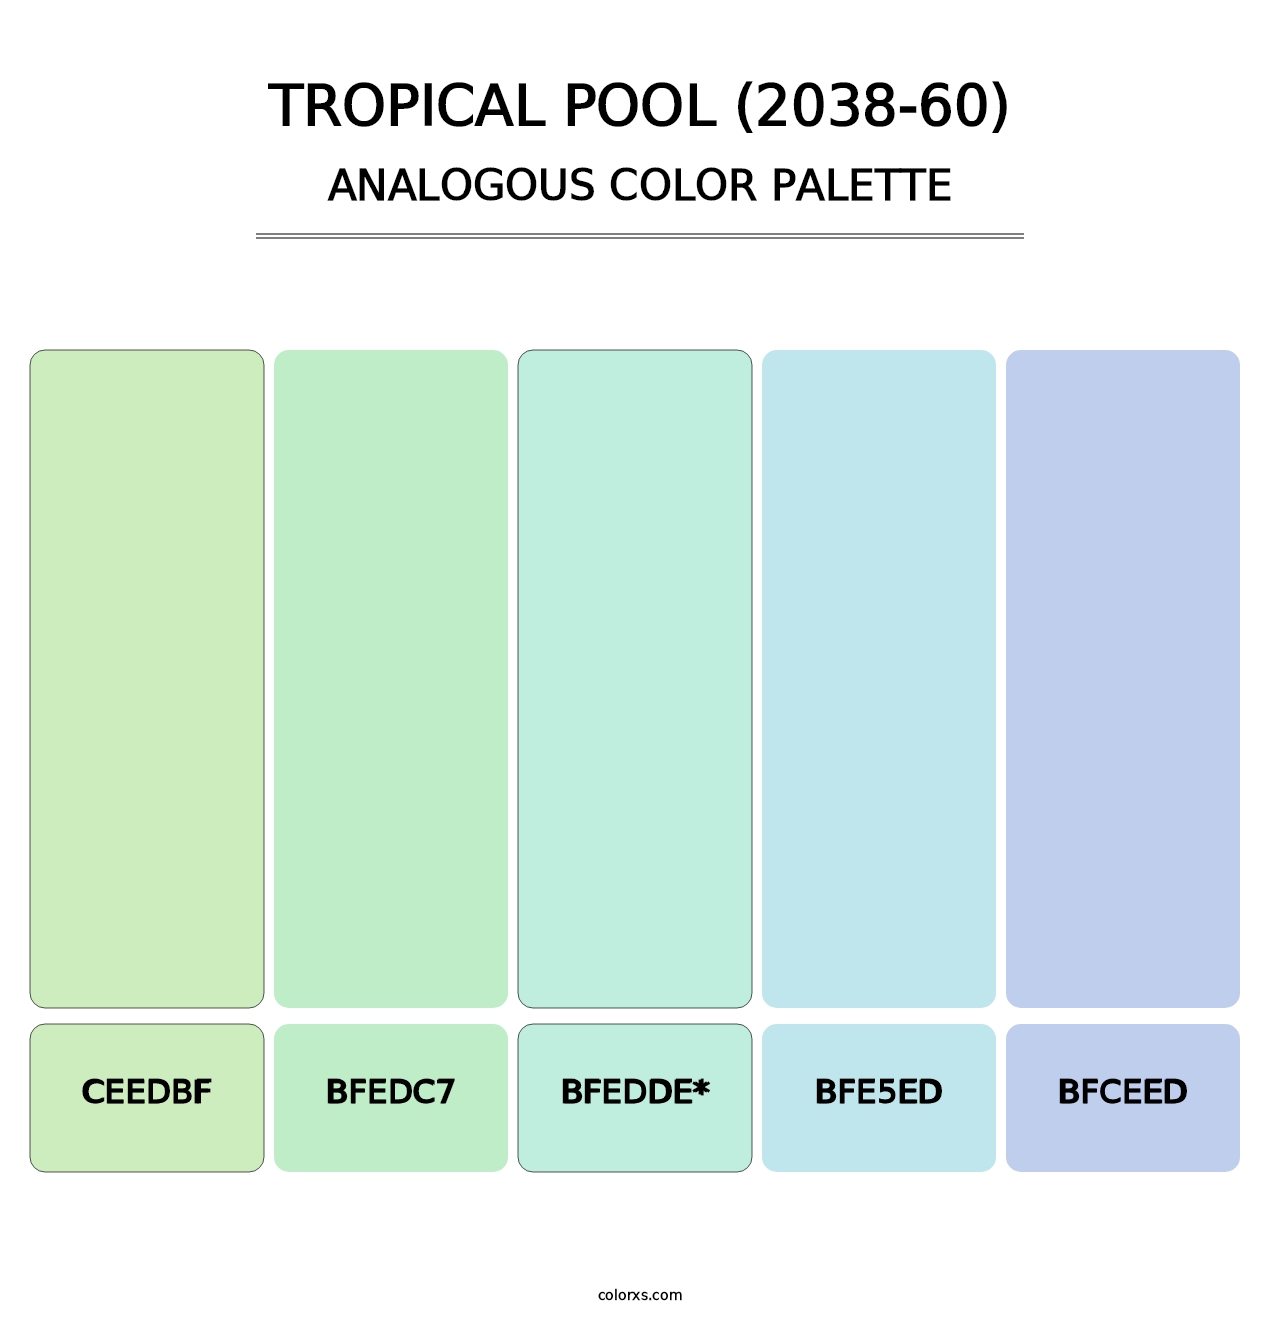 Tropical Pool (2038-60) - Analogous Color Palette